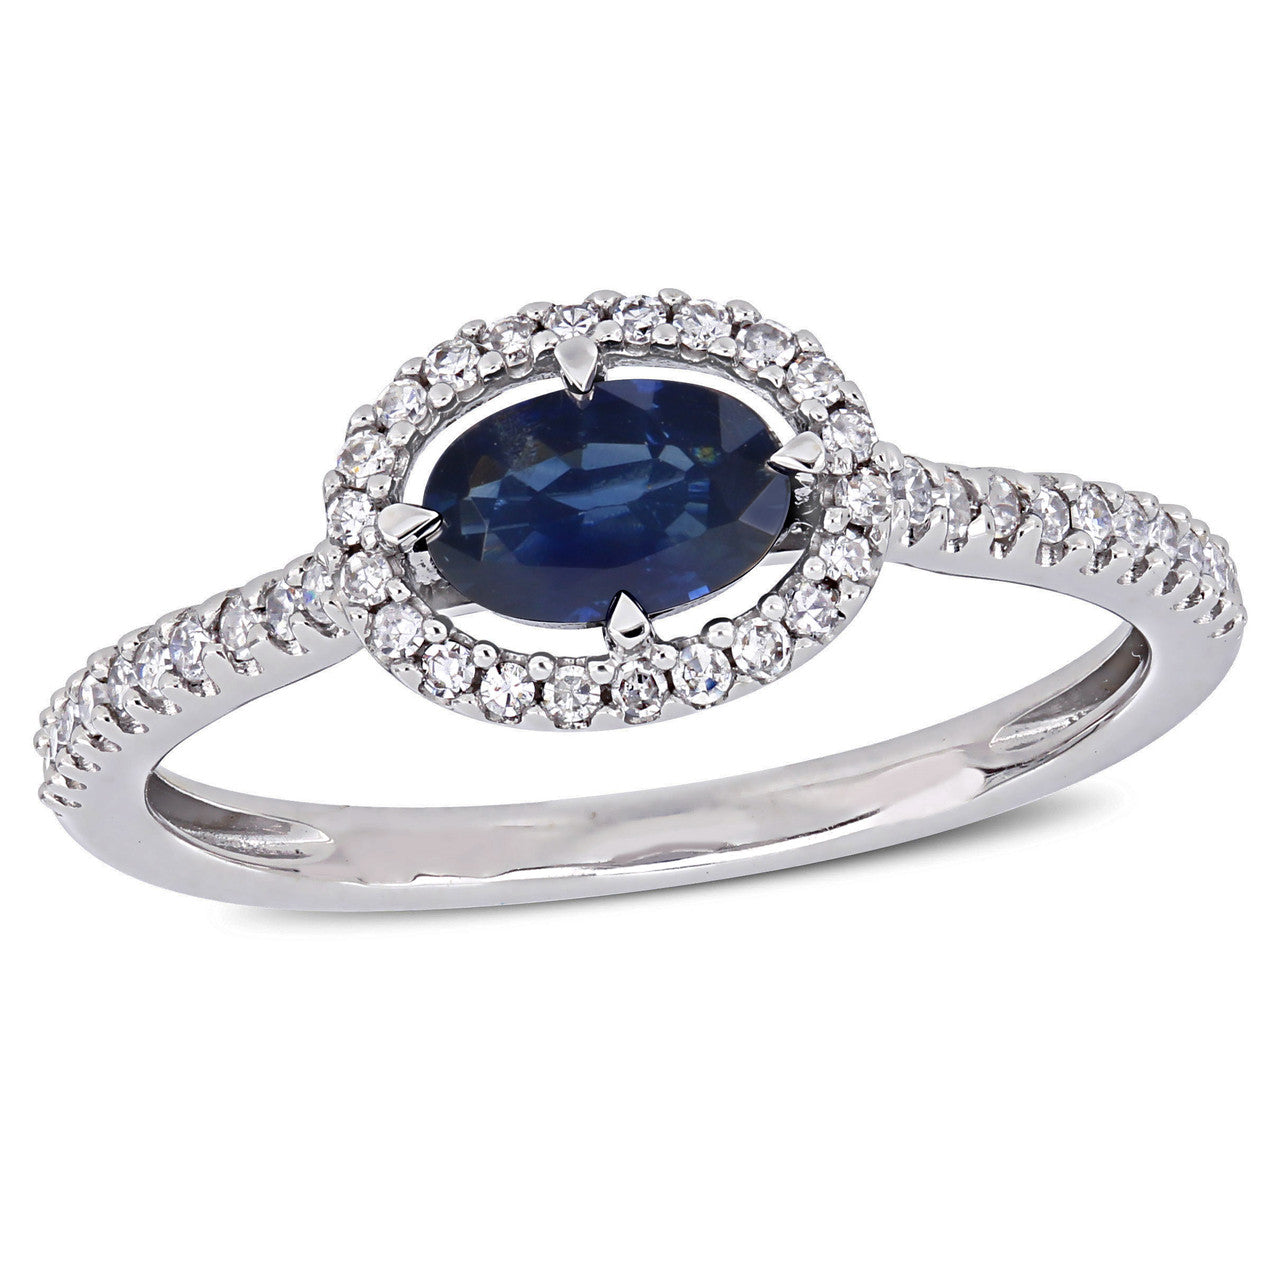 Ice Jewellery 1/5 CT Diamond TW And 5/8 CT TGW Sapphire Fashion Ring 14k White Gold GH I1;I2 - 75000004593 | Ice Jewellery Australia